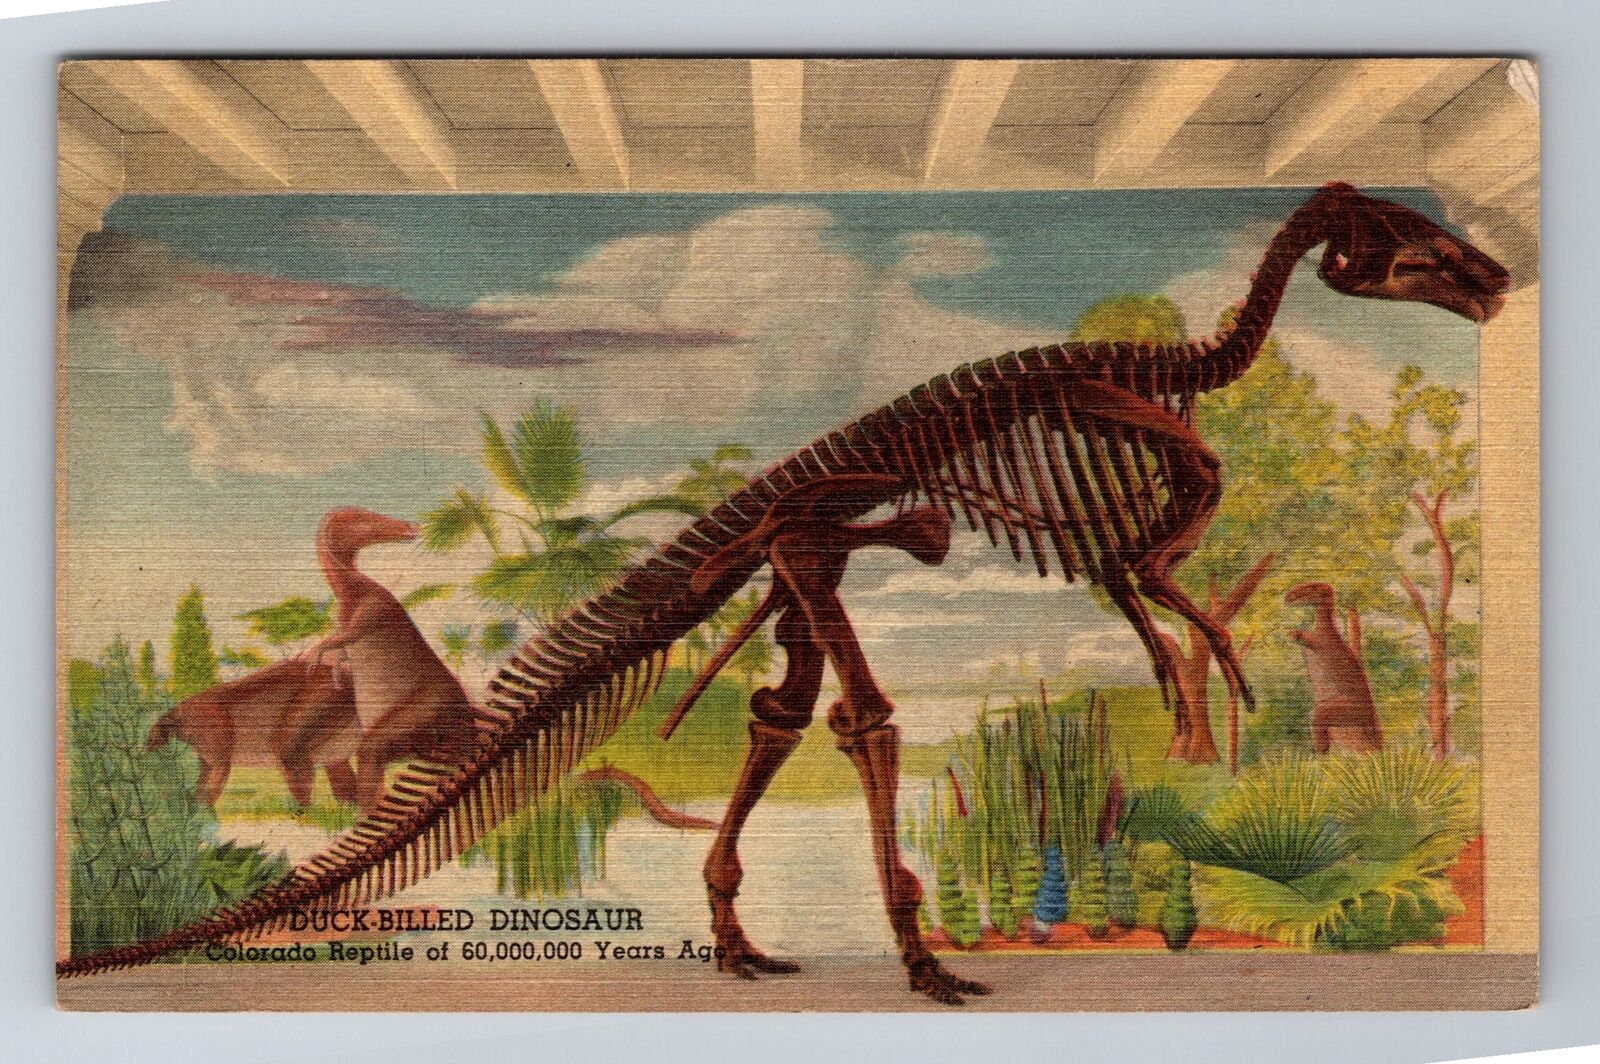 Denver CO-Colorado, History Museum, Duck-Billed Dinosaur, Vintage Postcard